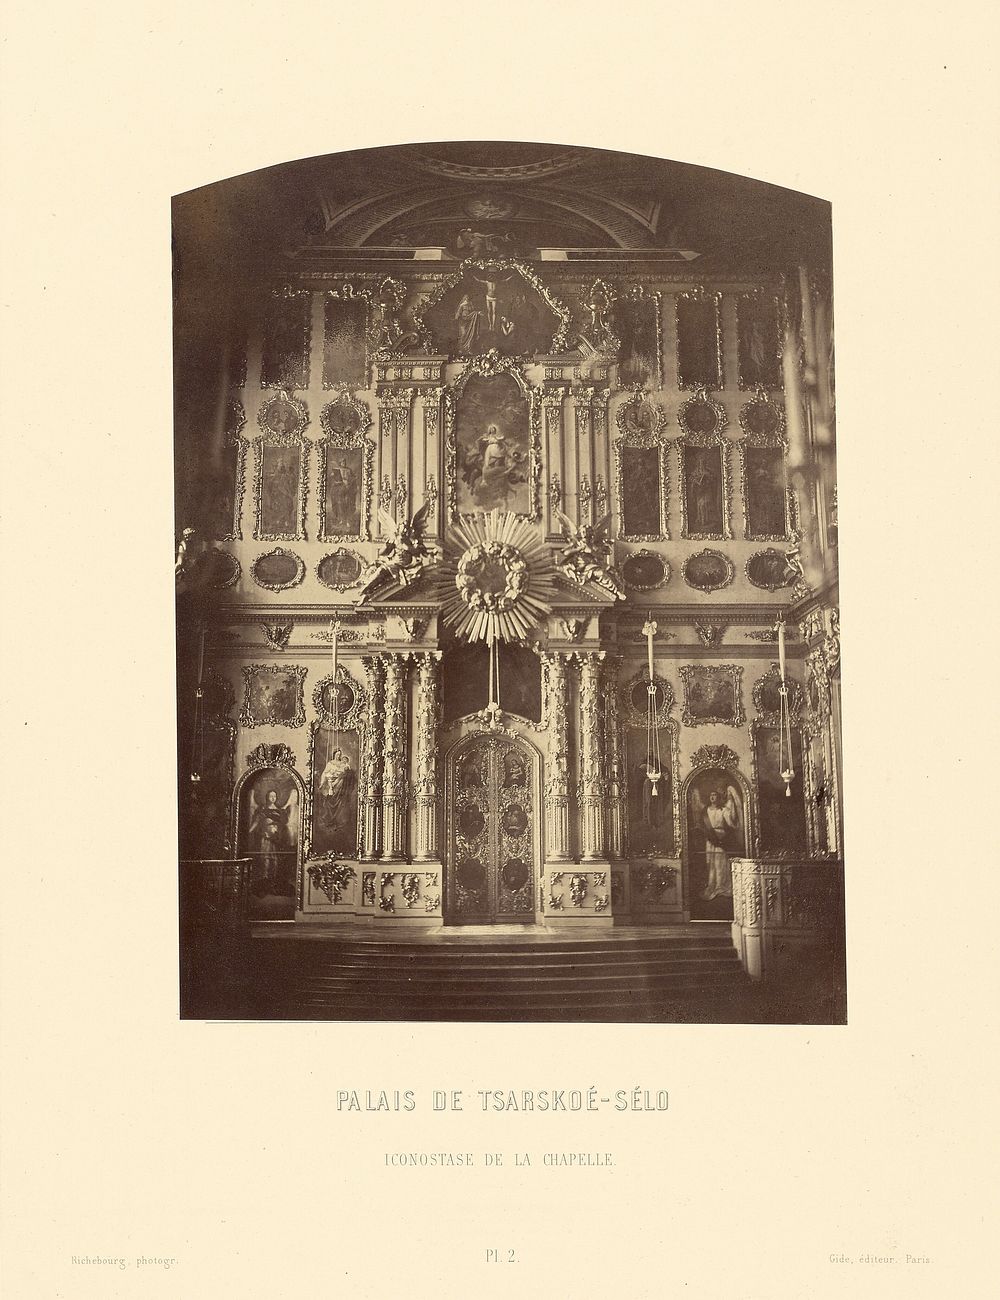 Palais de Tsarskoe-Selo, Iconostase de la Chapelle by Pierre Ambrose Richebourg